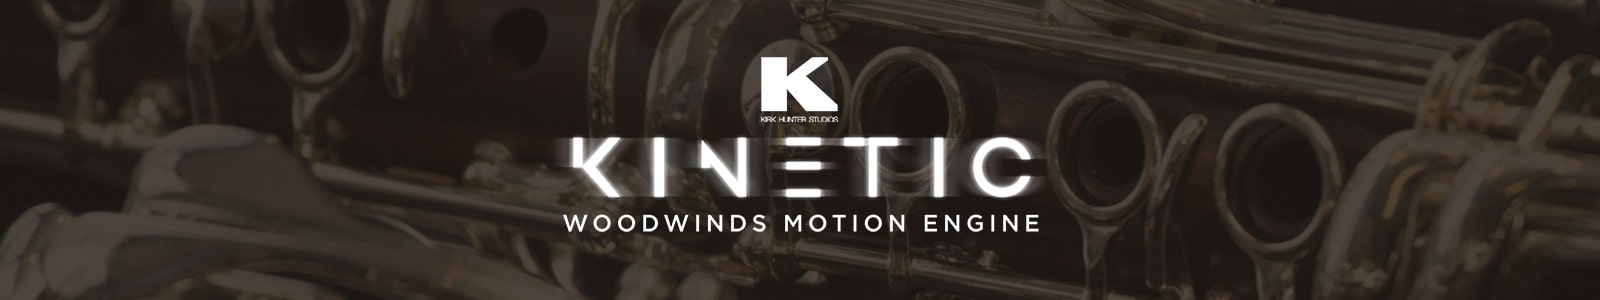 kinetic woodwinds motion engine